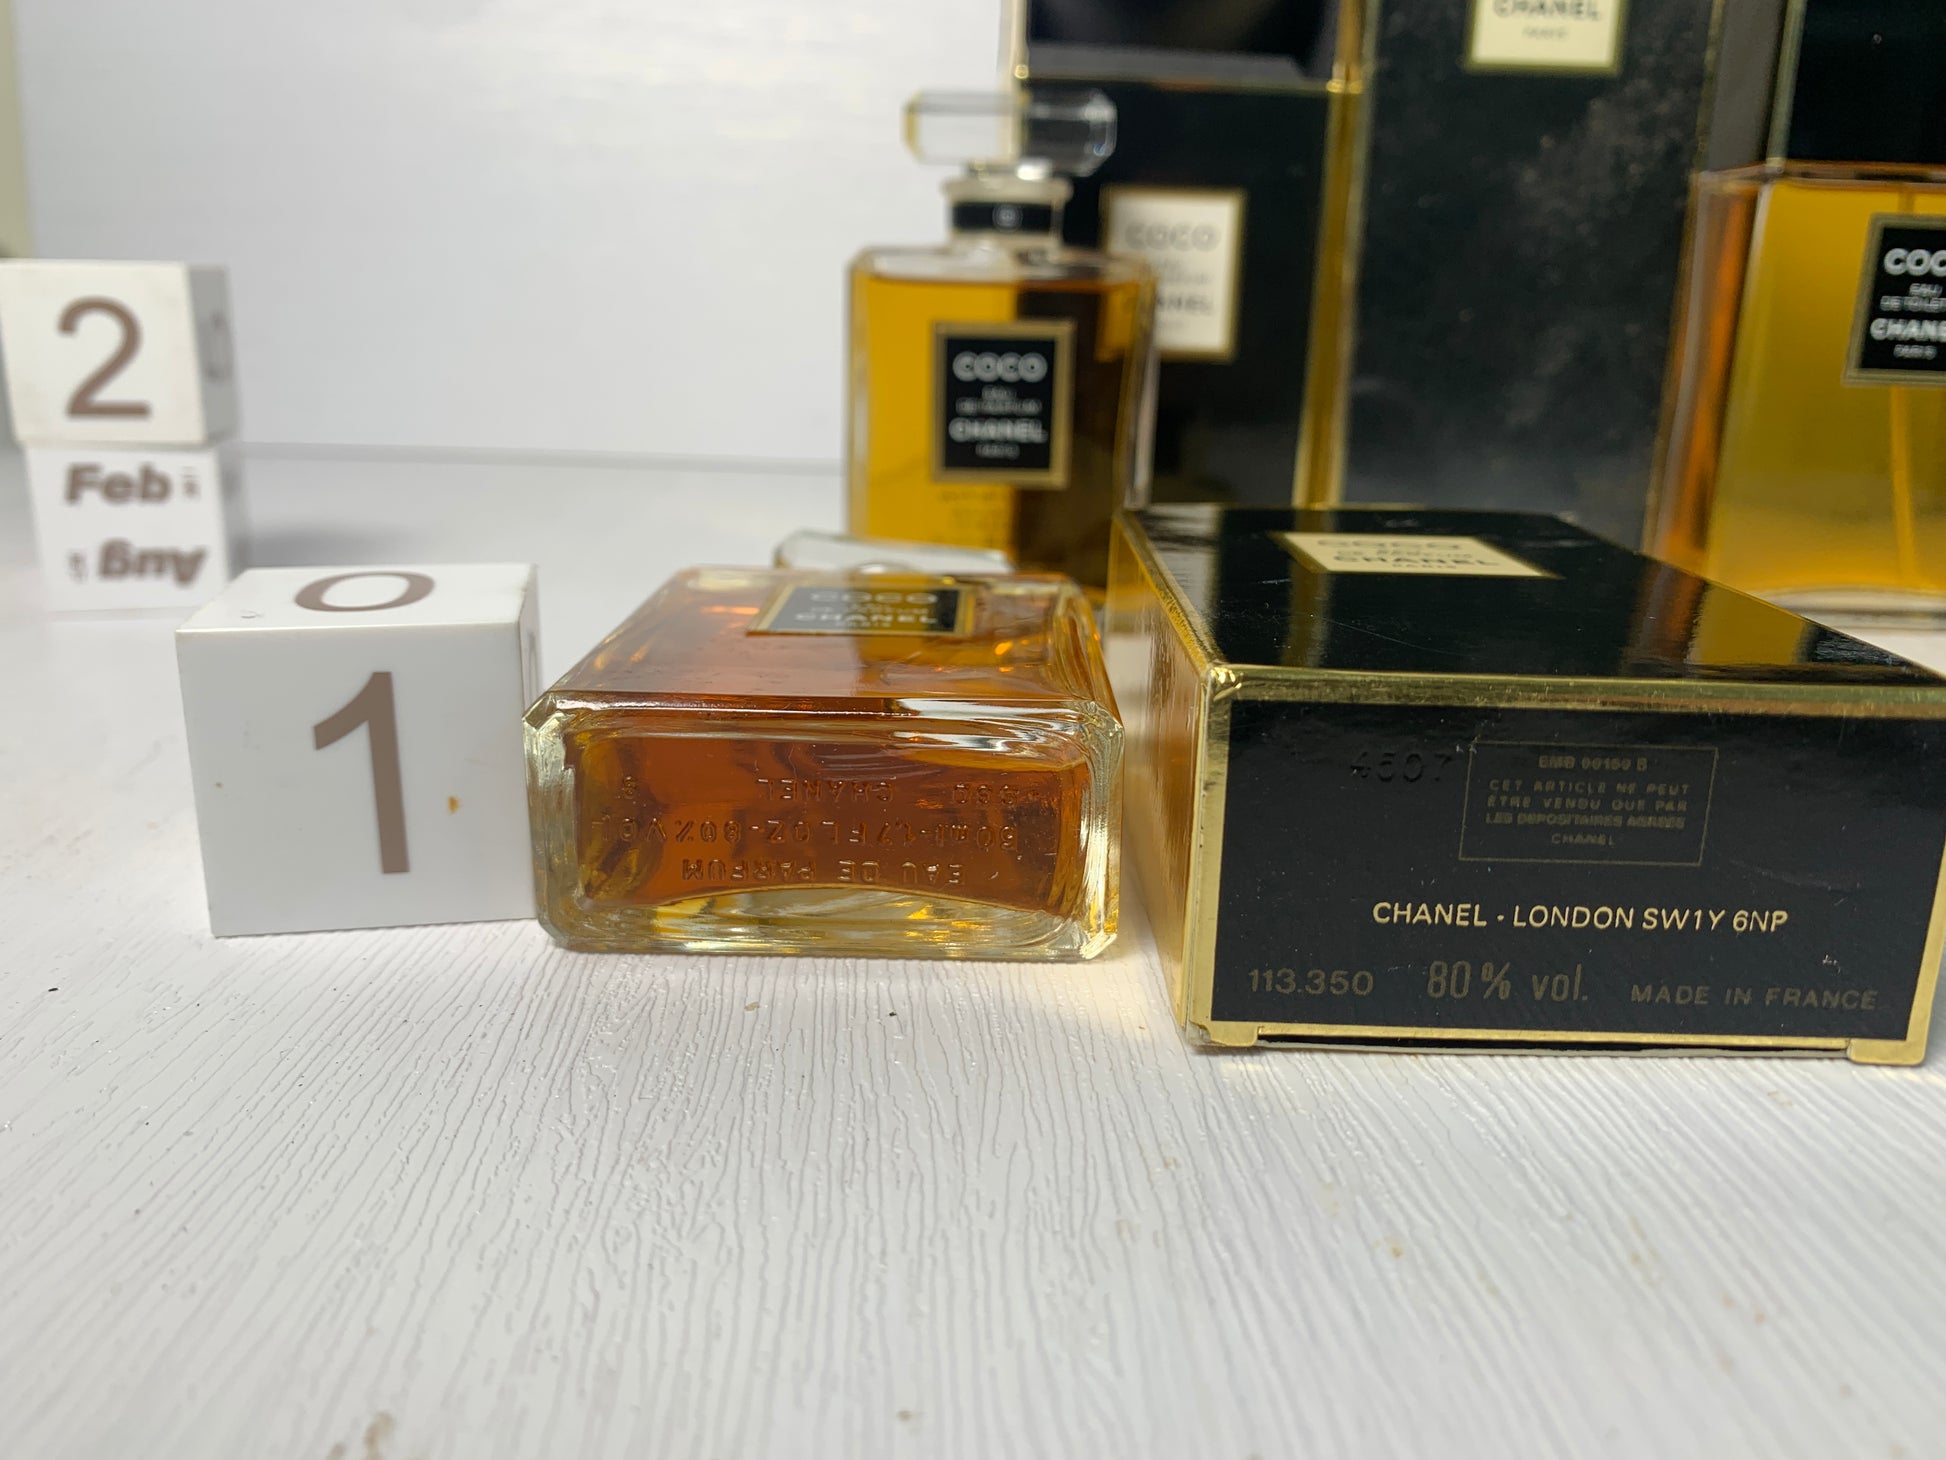 Chanel Coco Eau de Parfum reviews in Perfume - ChickAdvisor